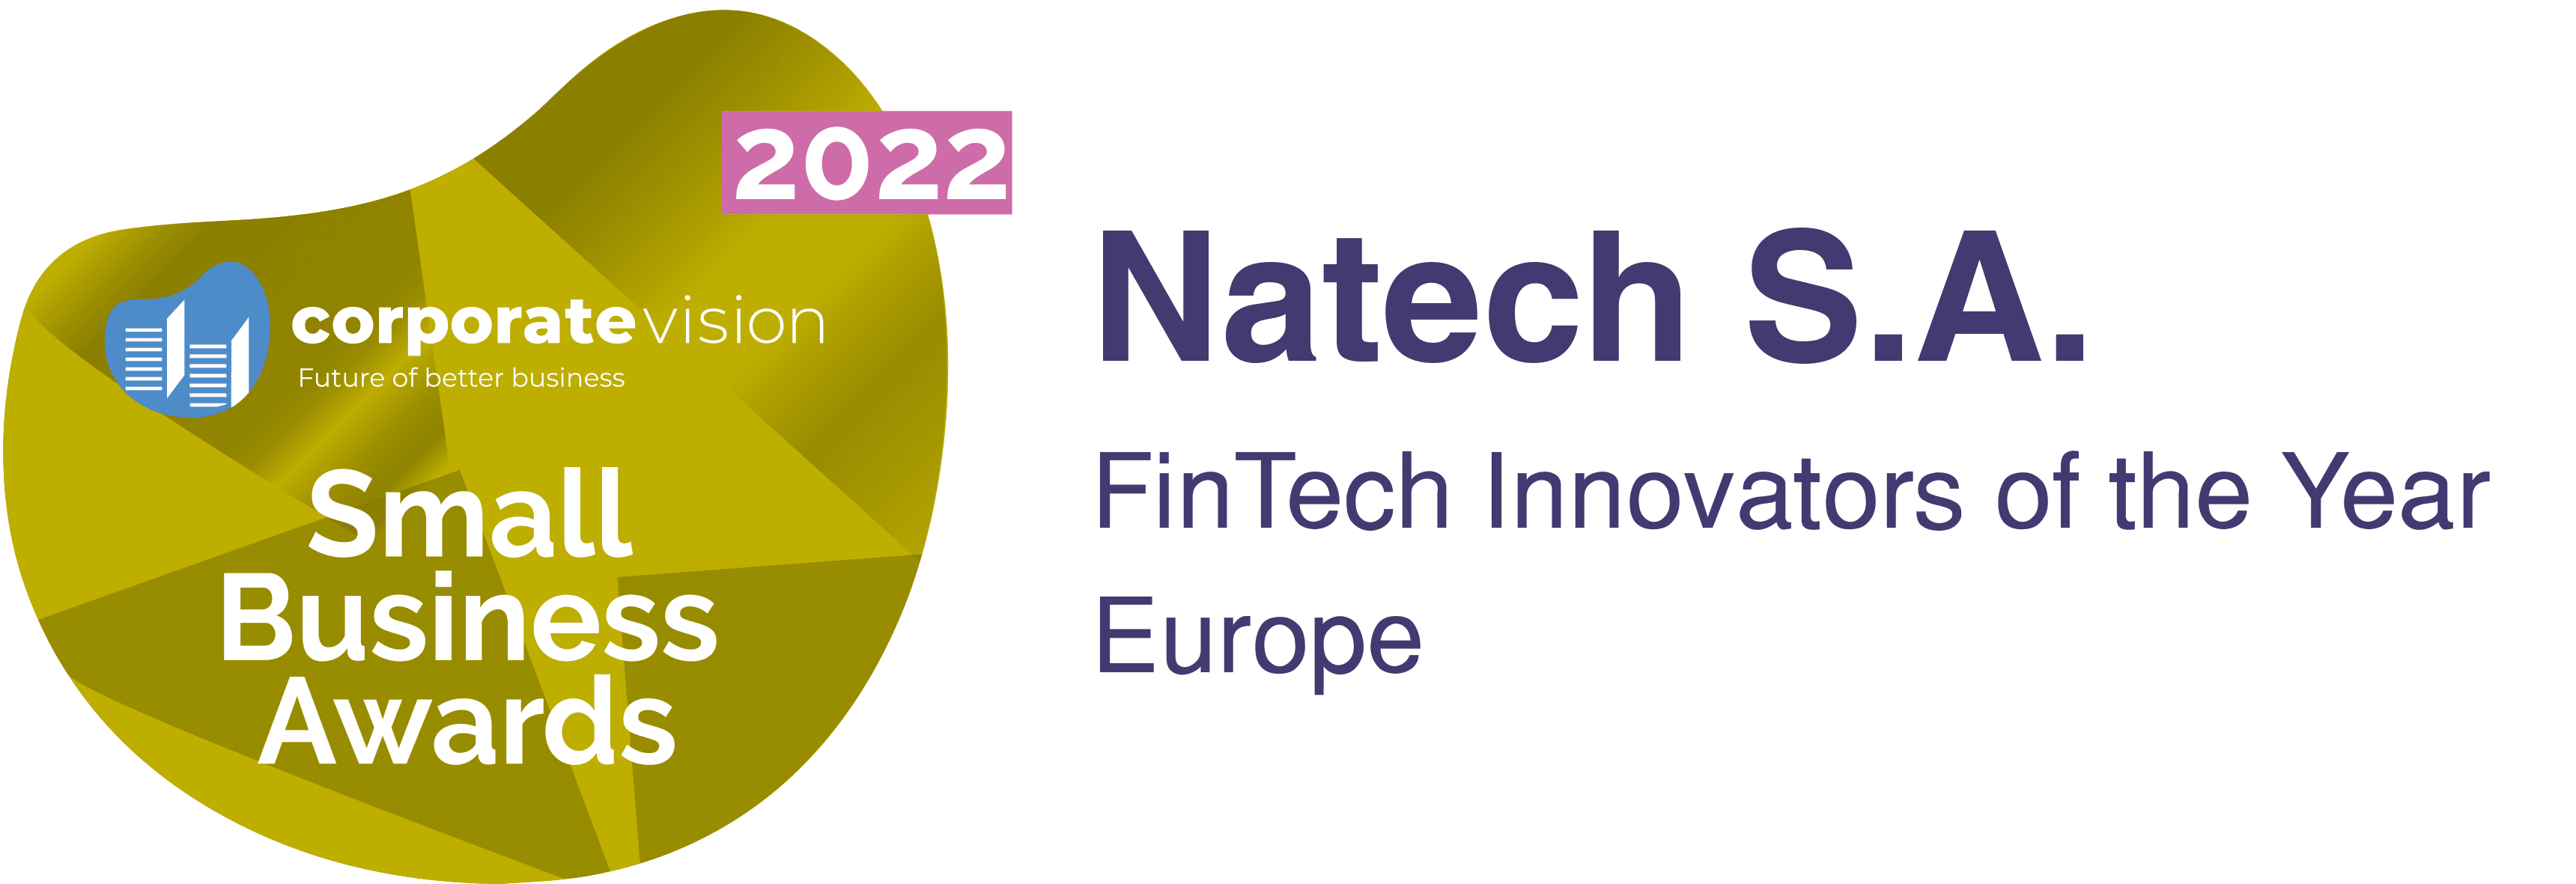 Natech news: “Fintech Innovators of the Year – Europe” Award